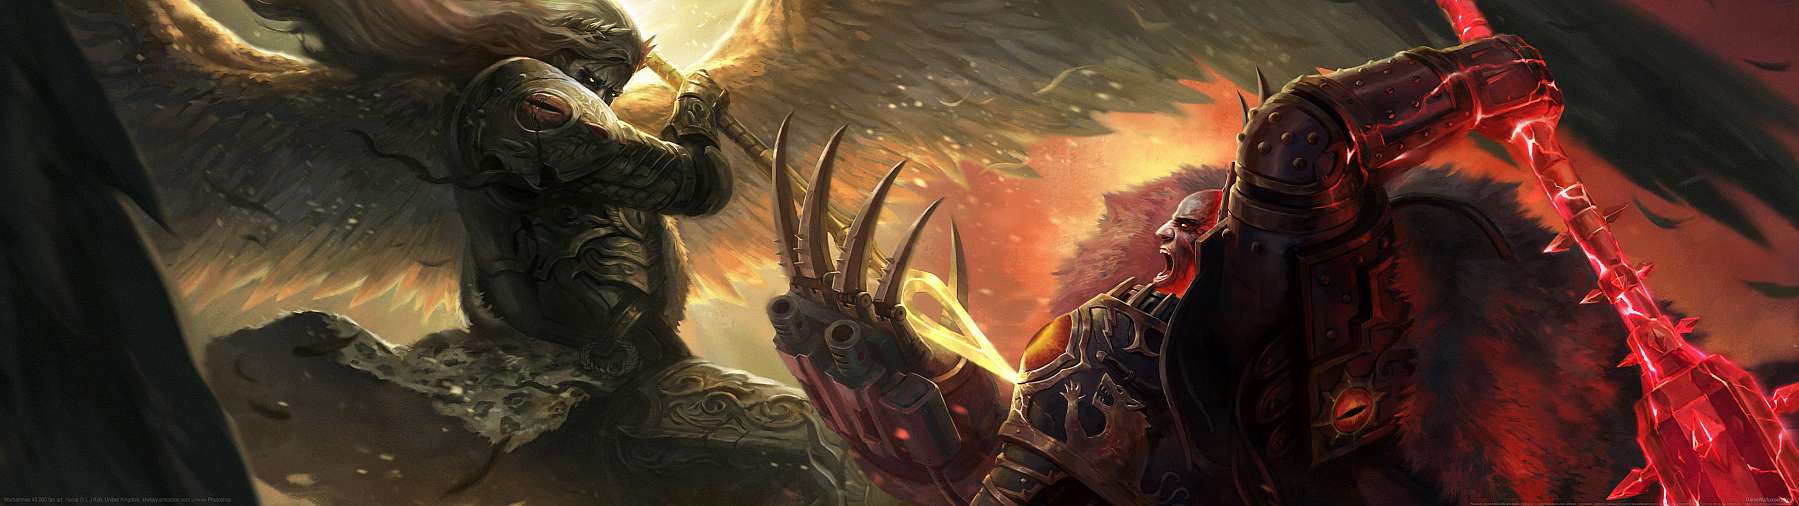 Warhammer 40,000 fan art superwide fond d'écran 03